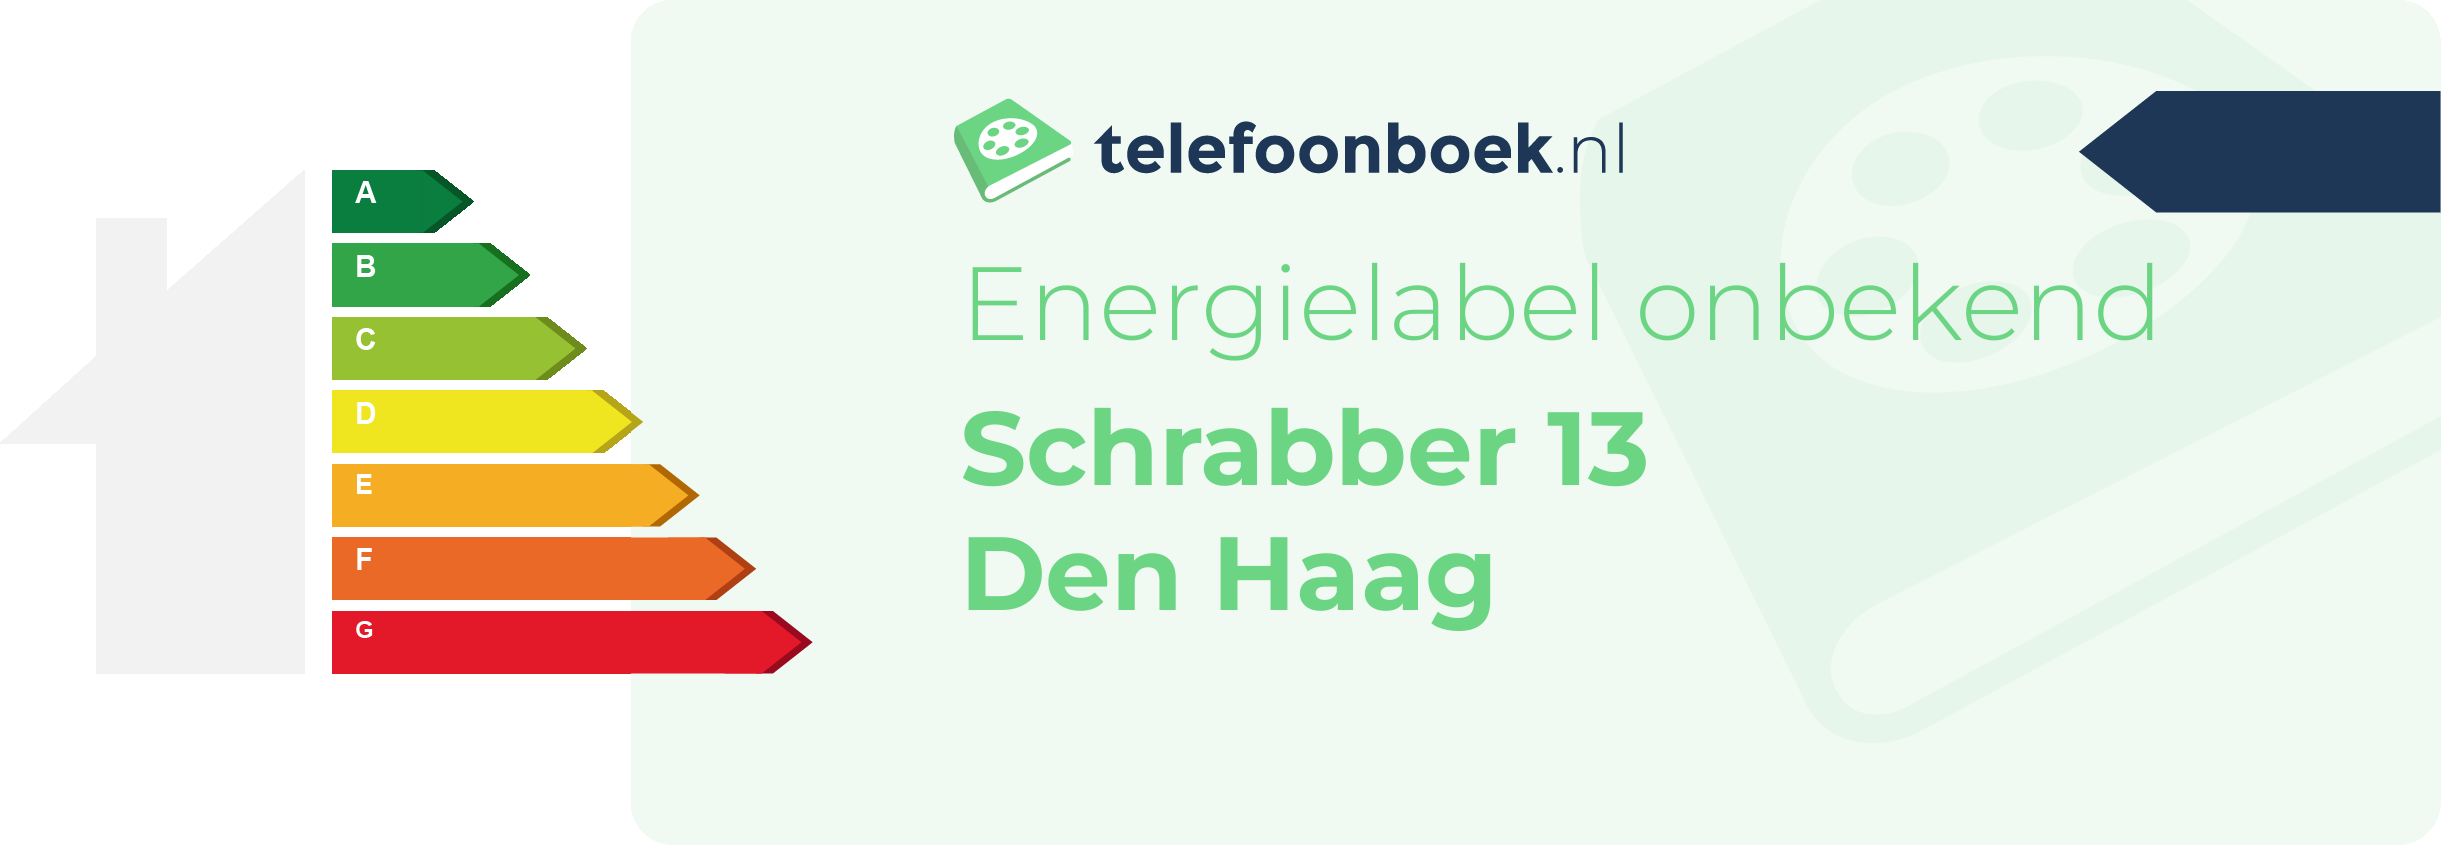 Energielabel Schrabber 13 Den Haag